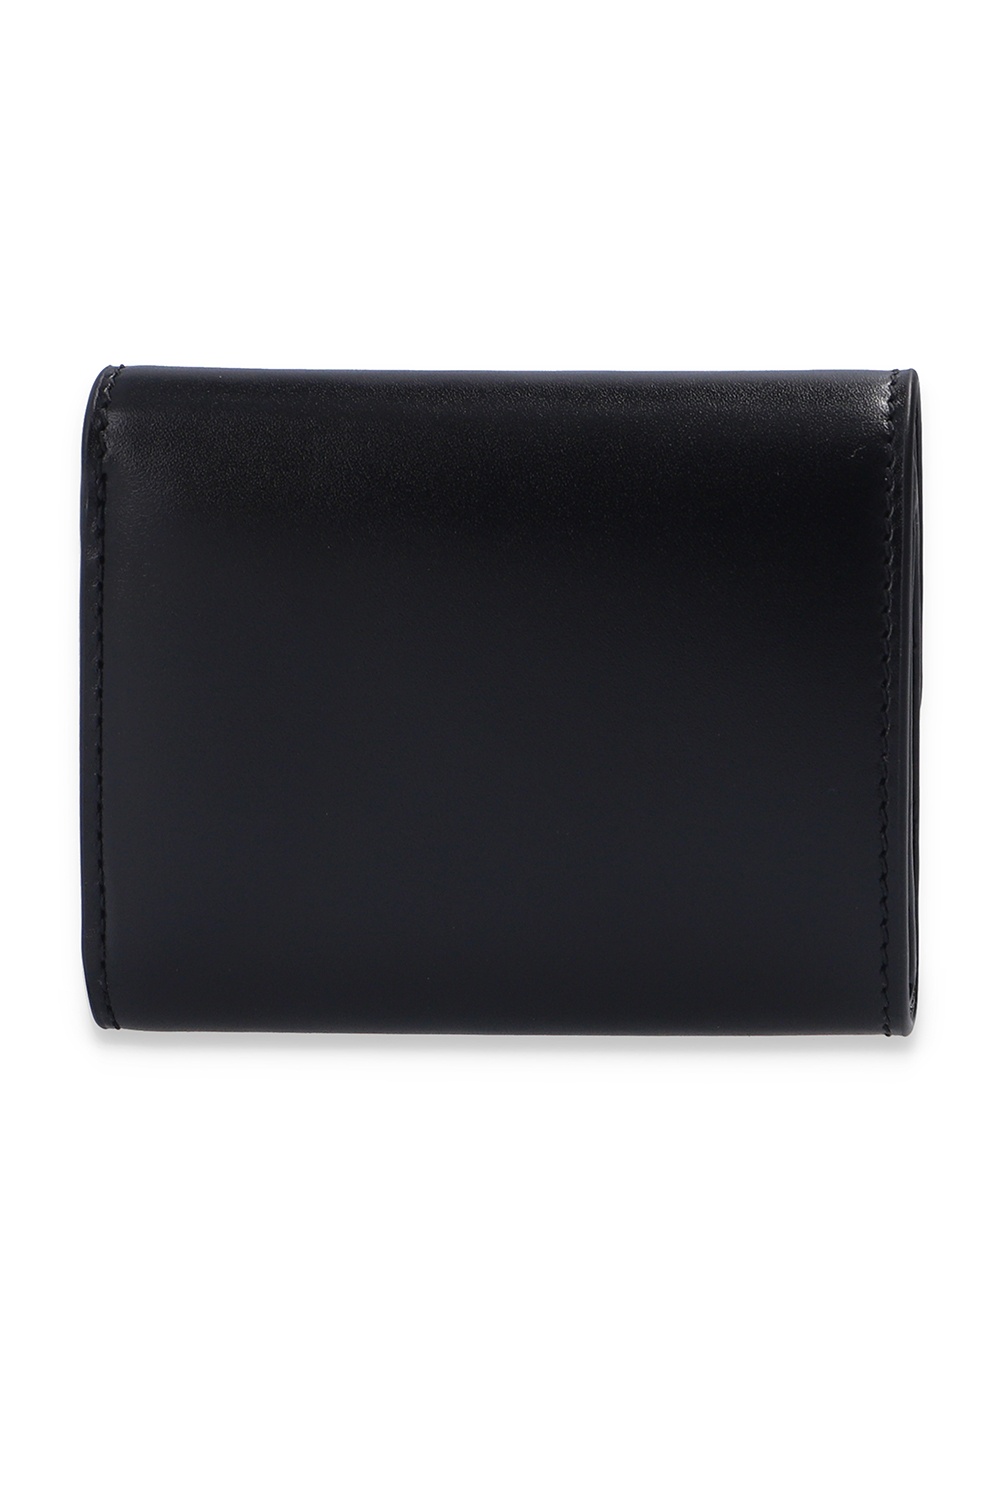 Black Wallet with logo Tory Burch - Vitkac Italy